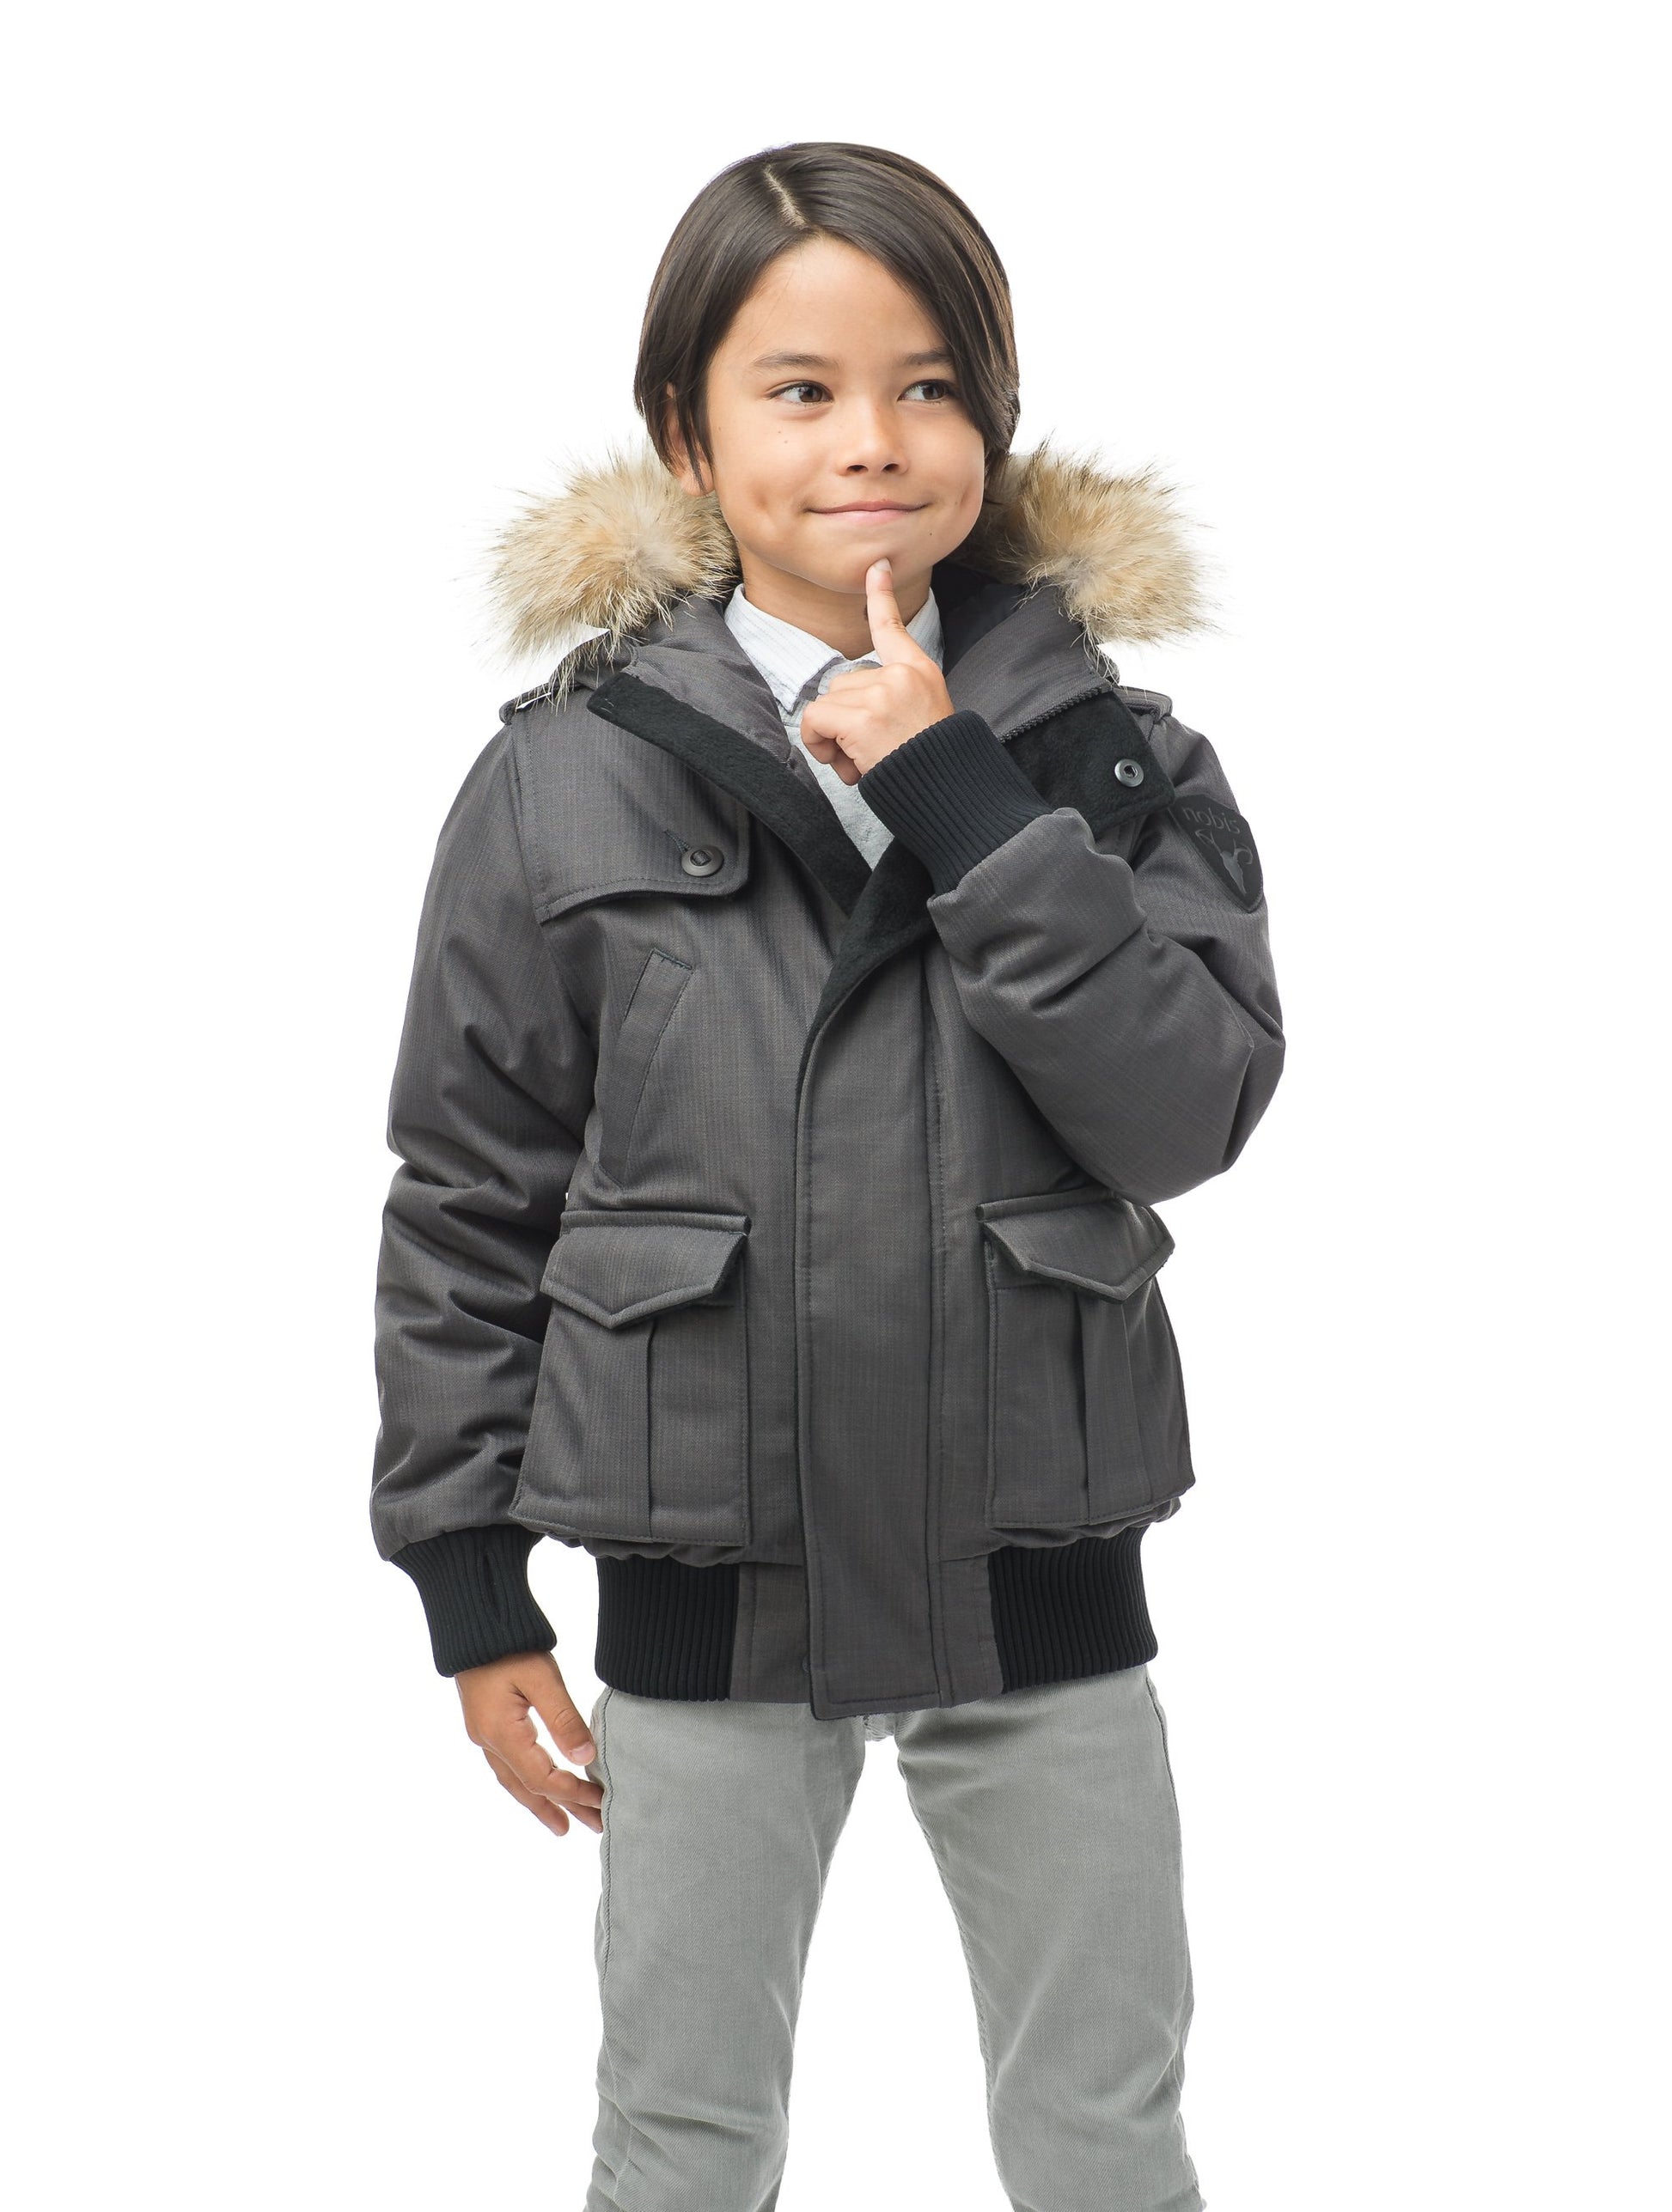 Kid's waist length down bomber jacket with fur trim hood in CH Steel Grey